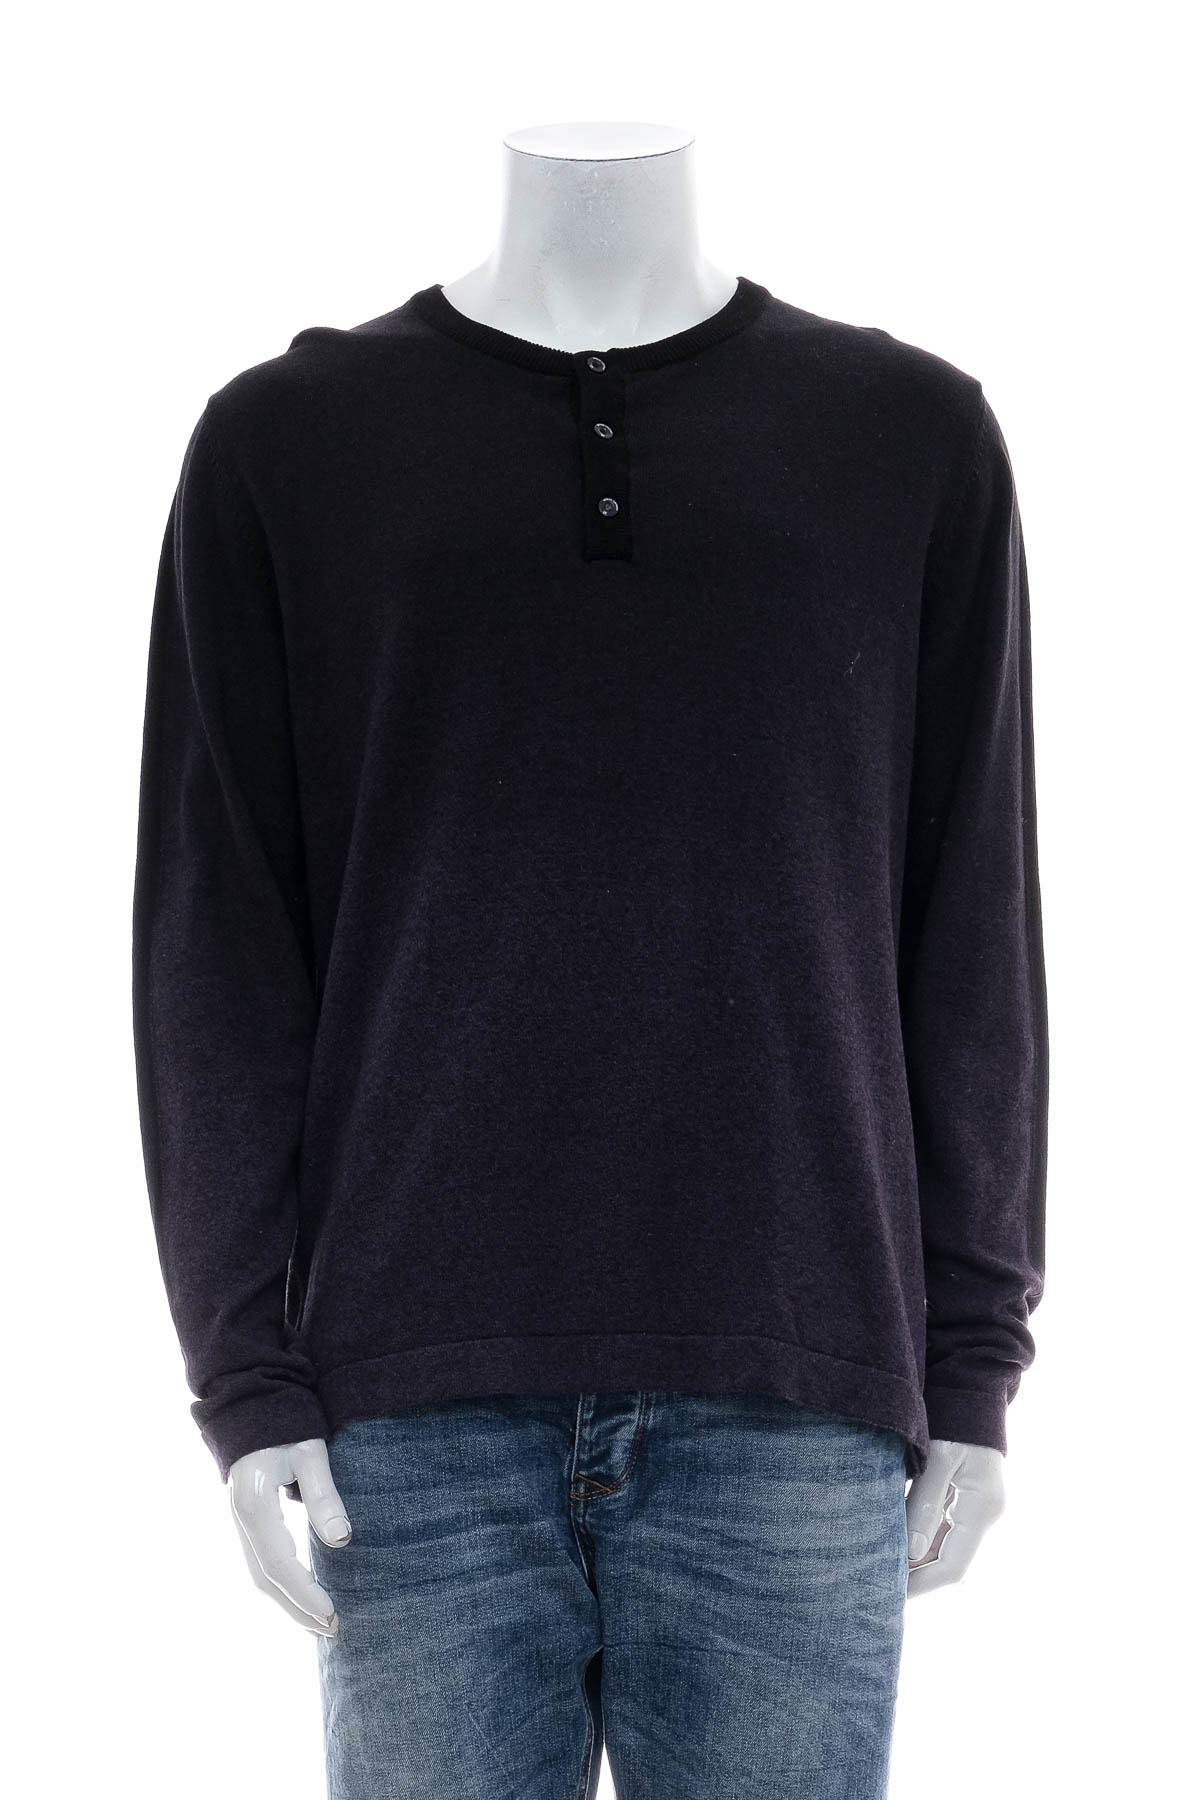 Men's sweater - Angelo Litrico - 0